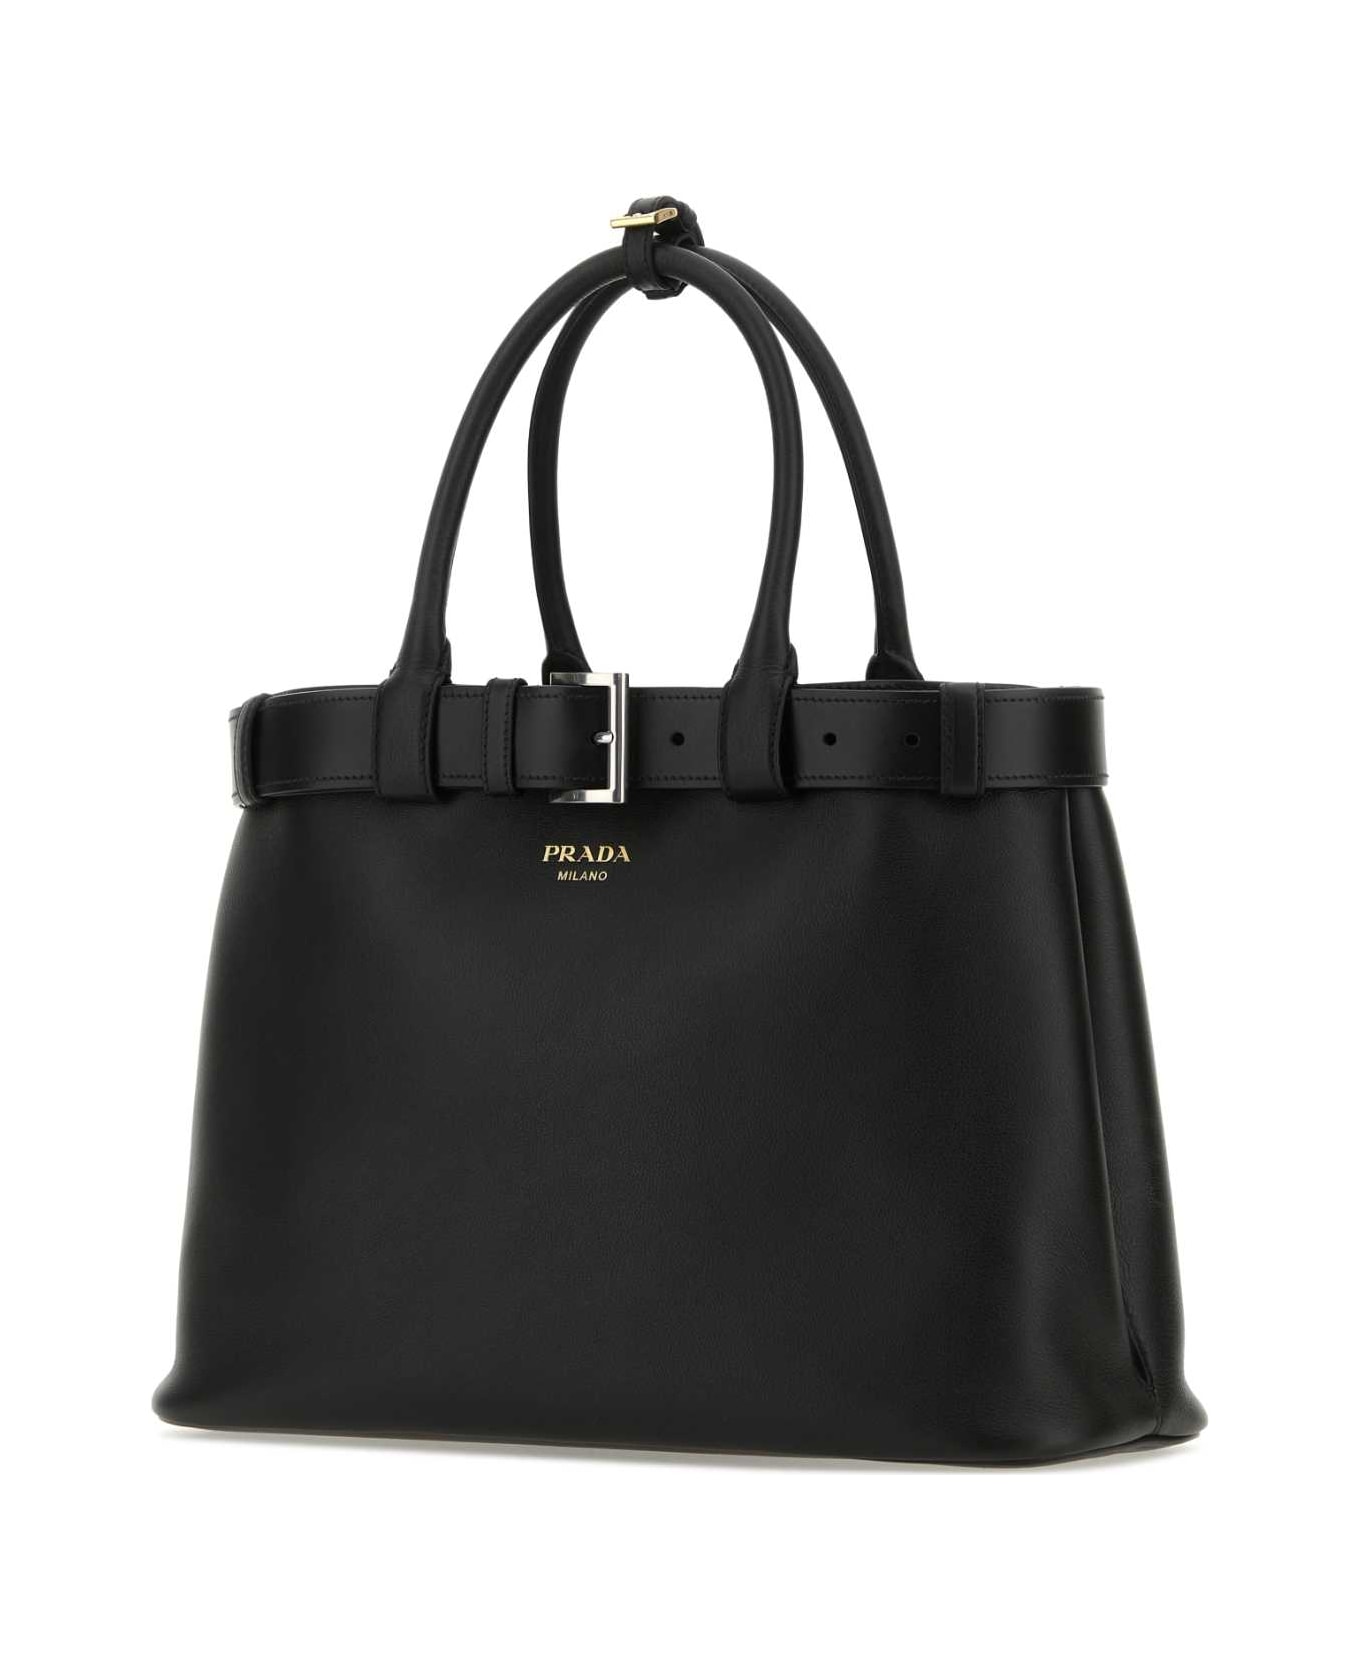 Prada Black Leather Prada Buckle Large Handbag - NERO